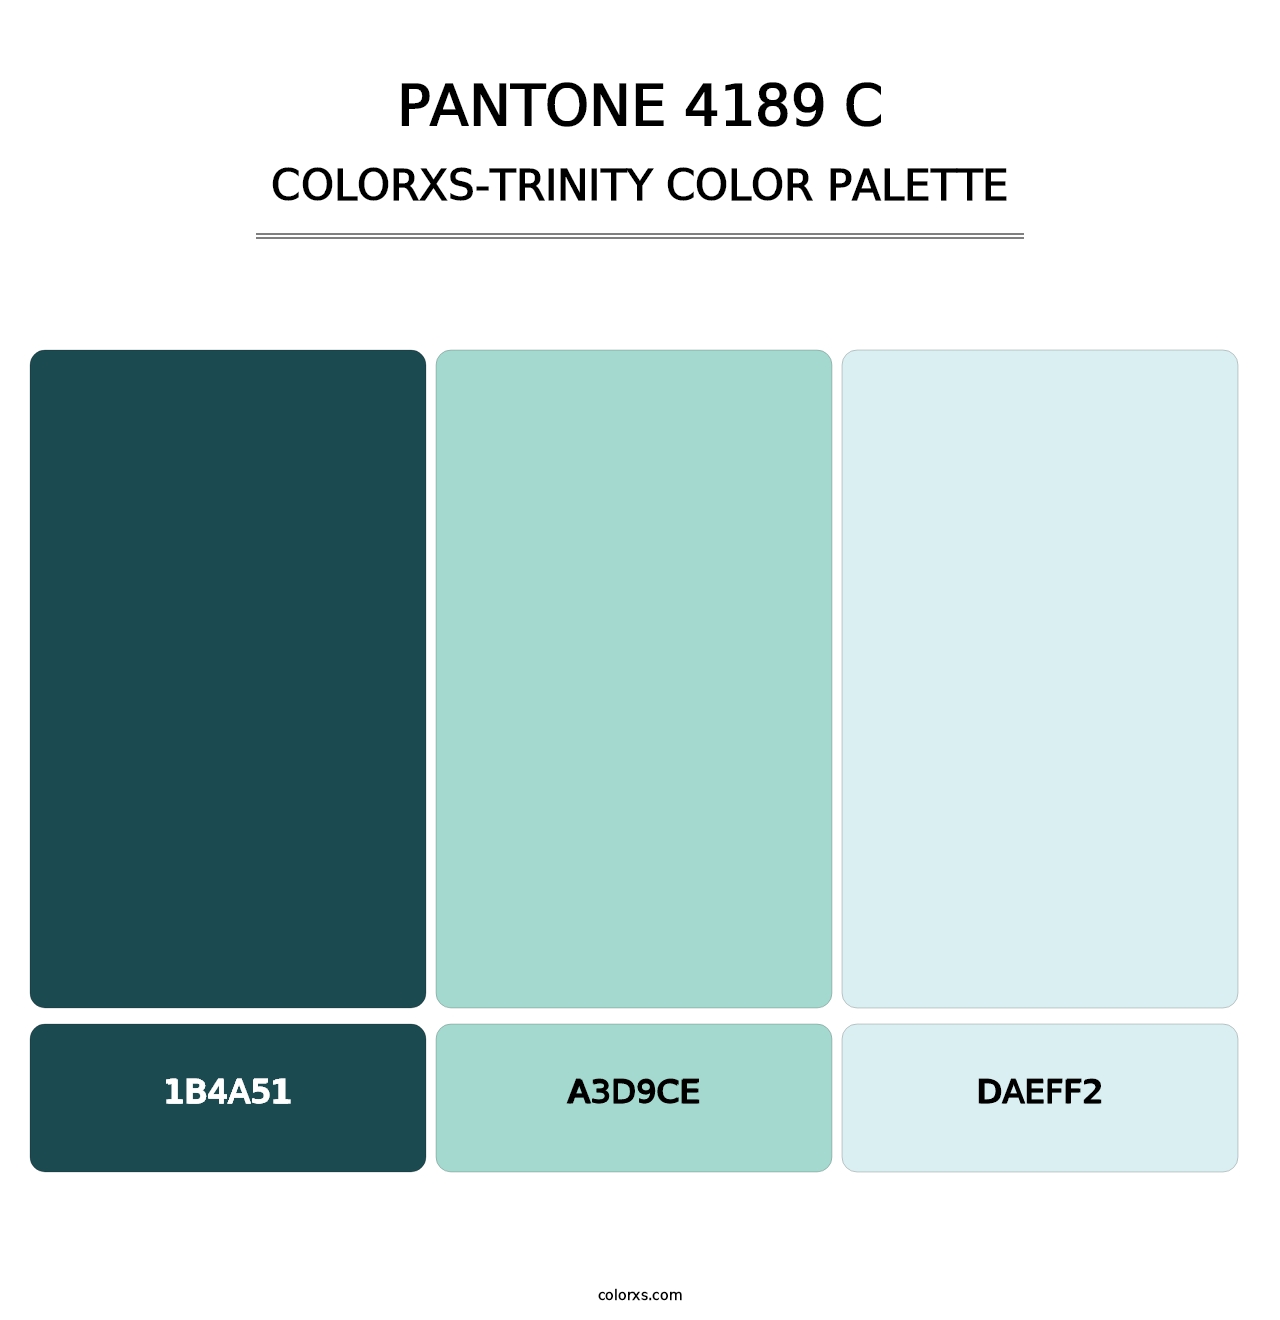 PANTONE 4189 C - Colorxs Trinity Palette